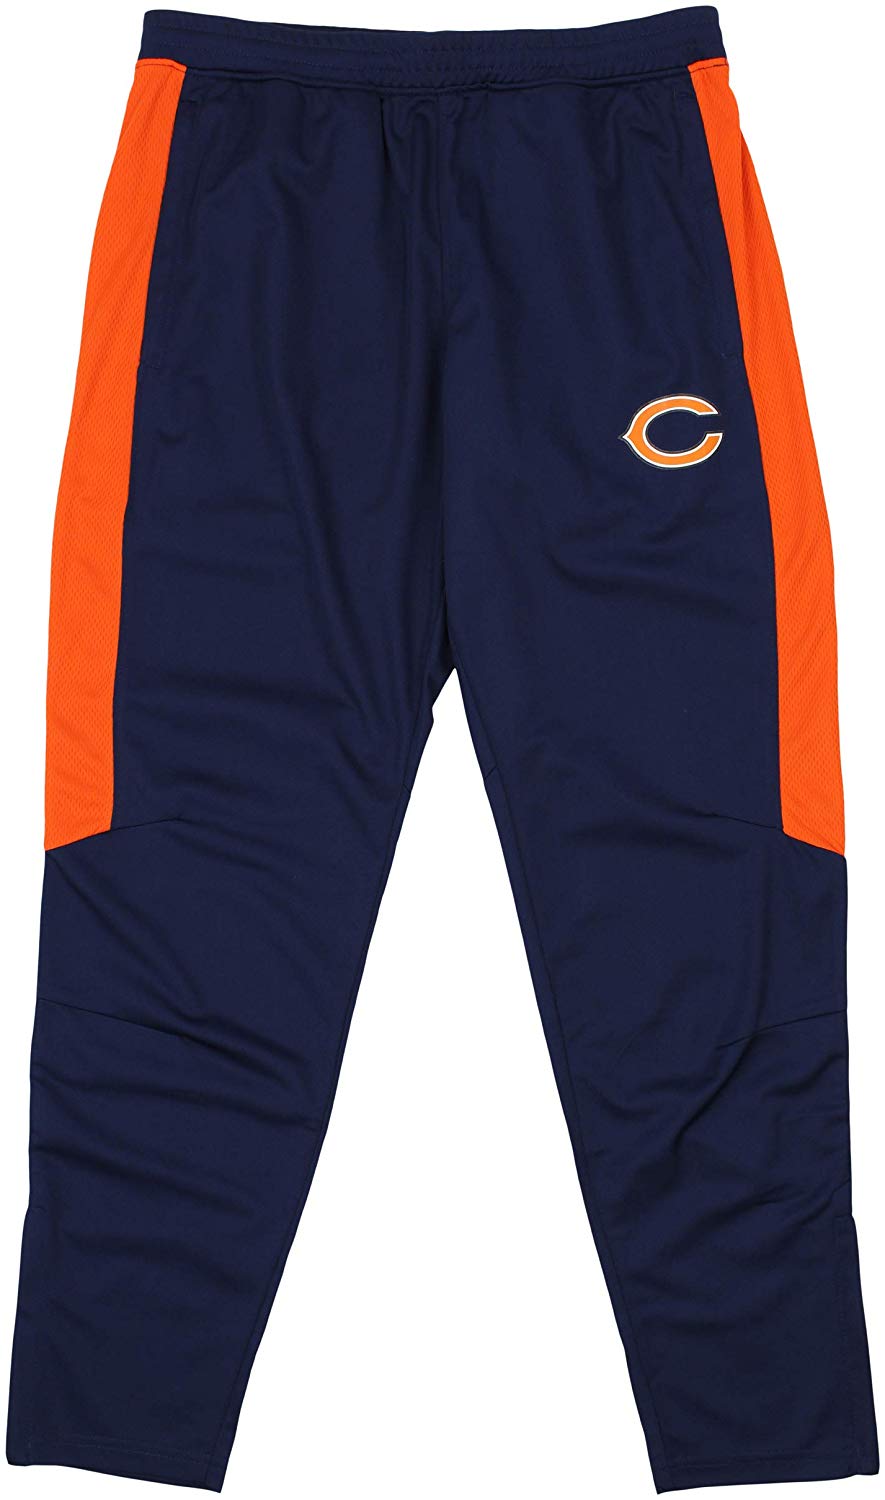 Zubaz NFL Football Men's Chicago Bears Athletic Track Pant